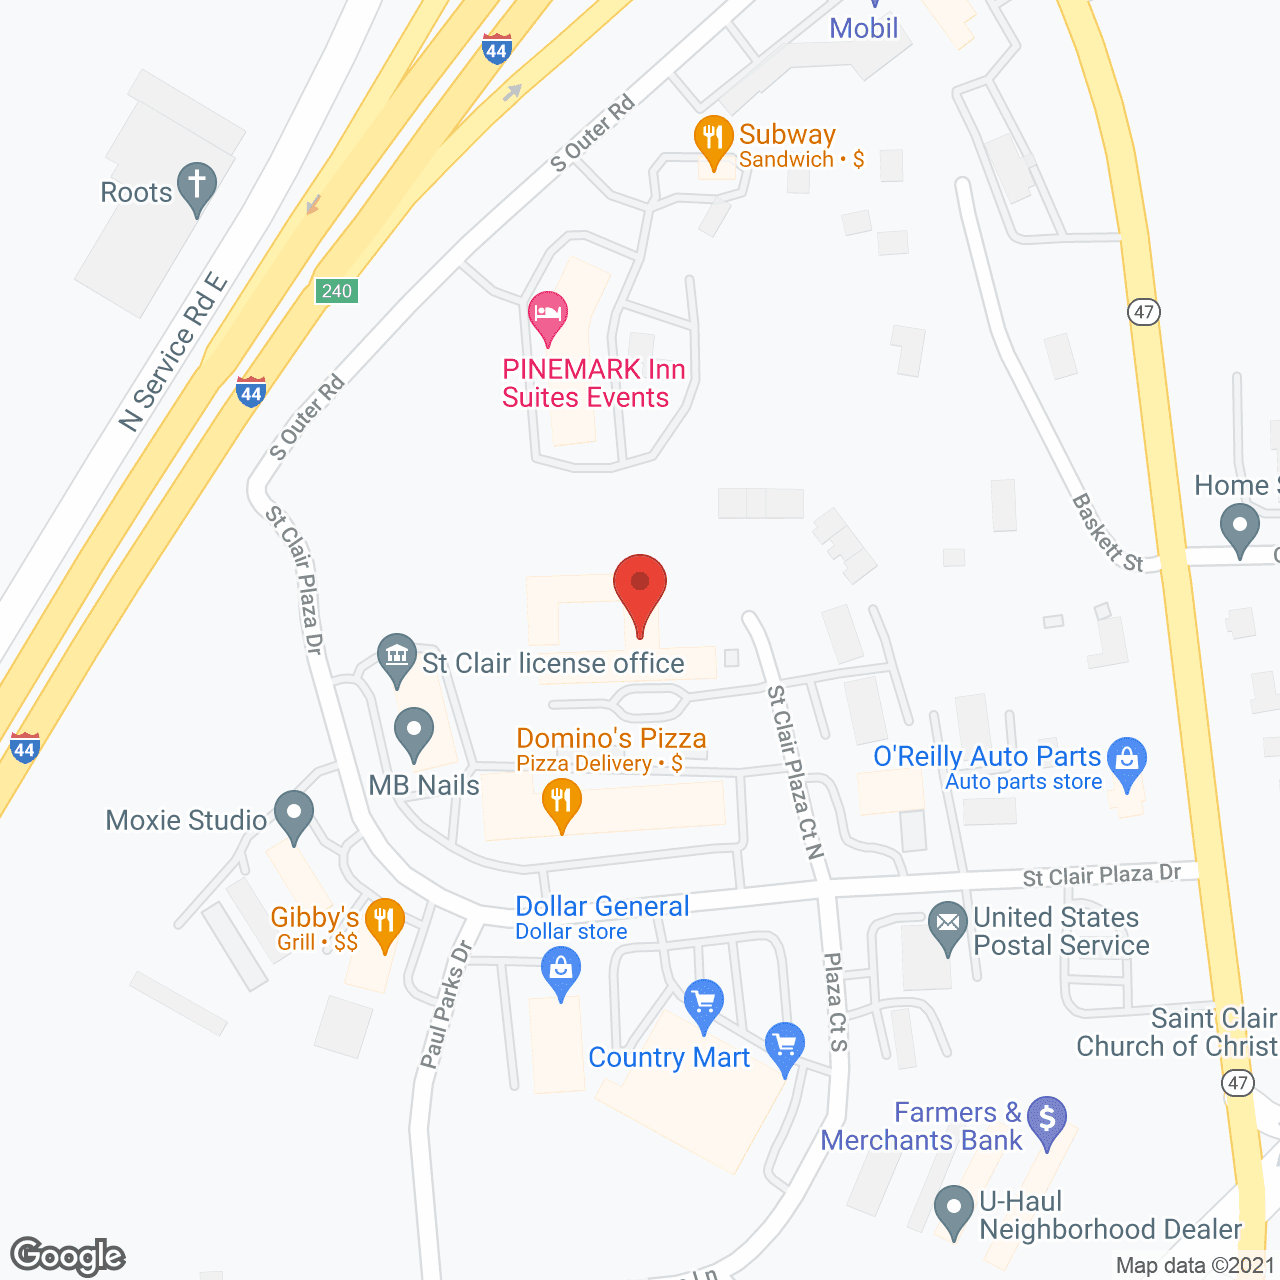 St. Clair Nursing Center in google map